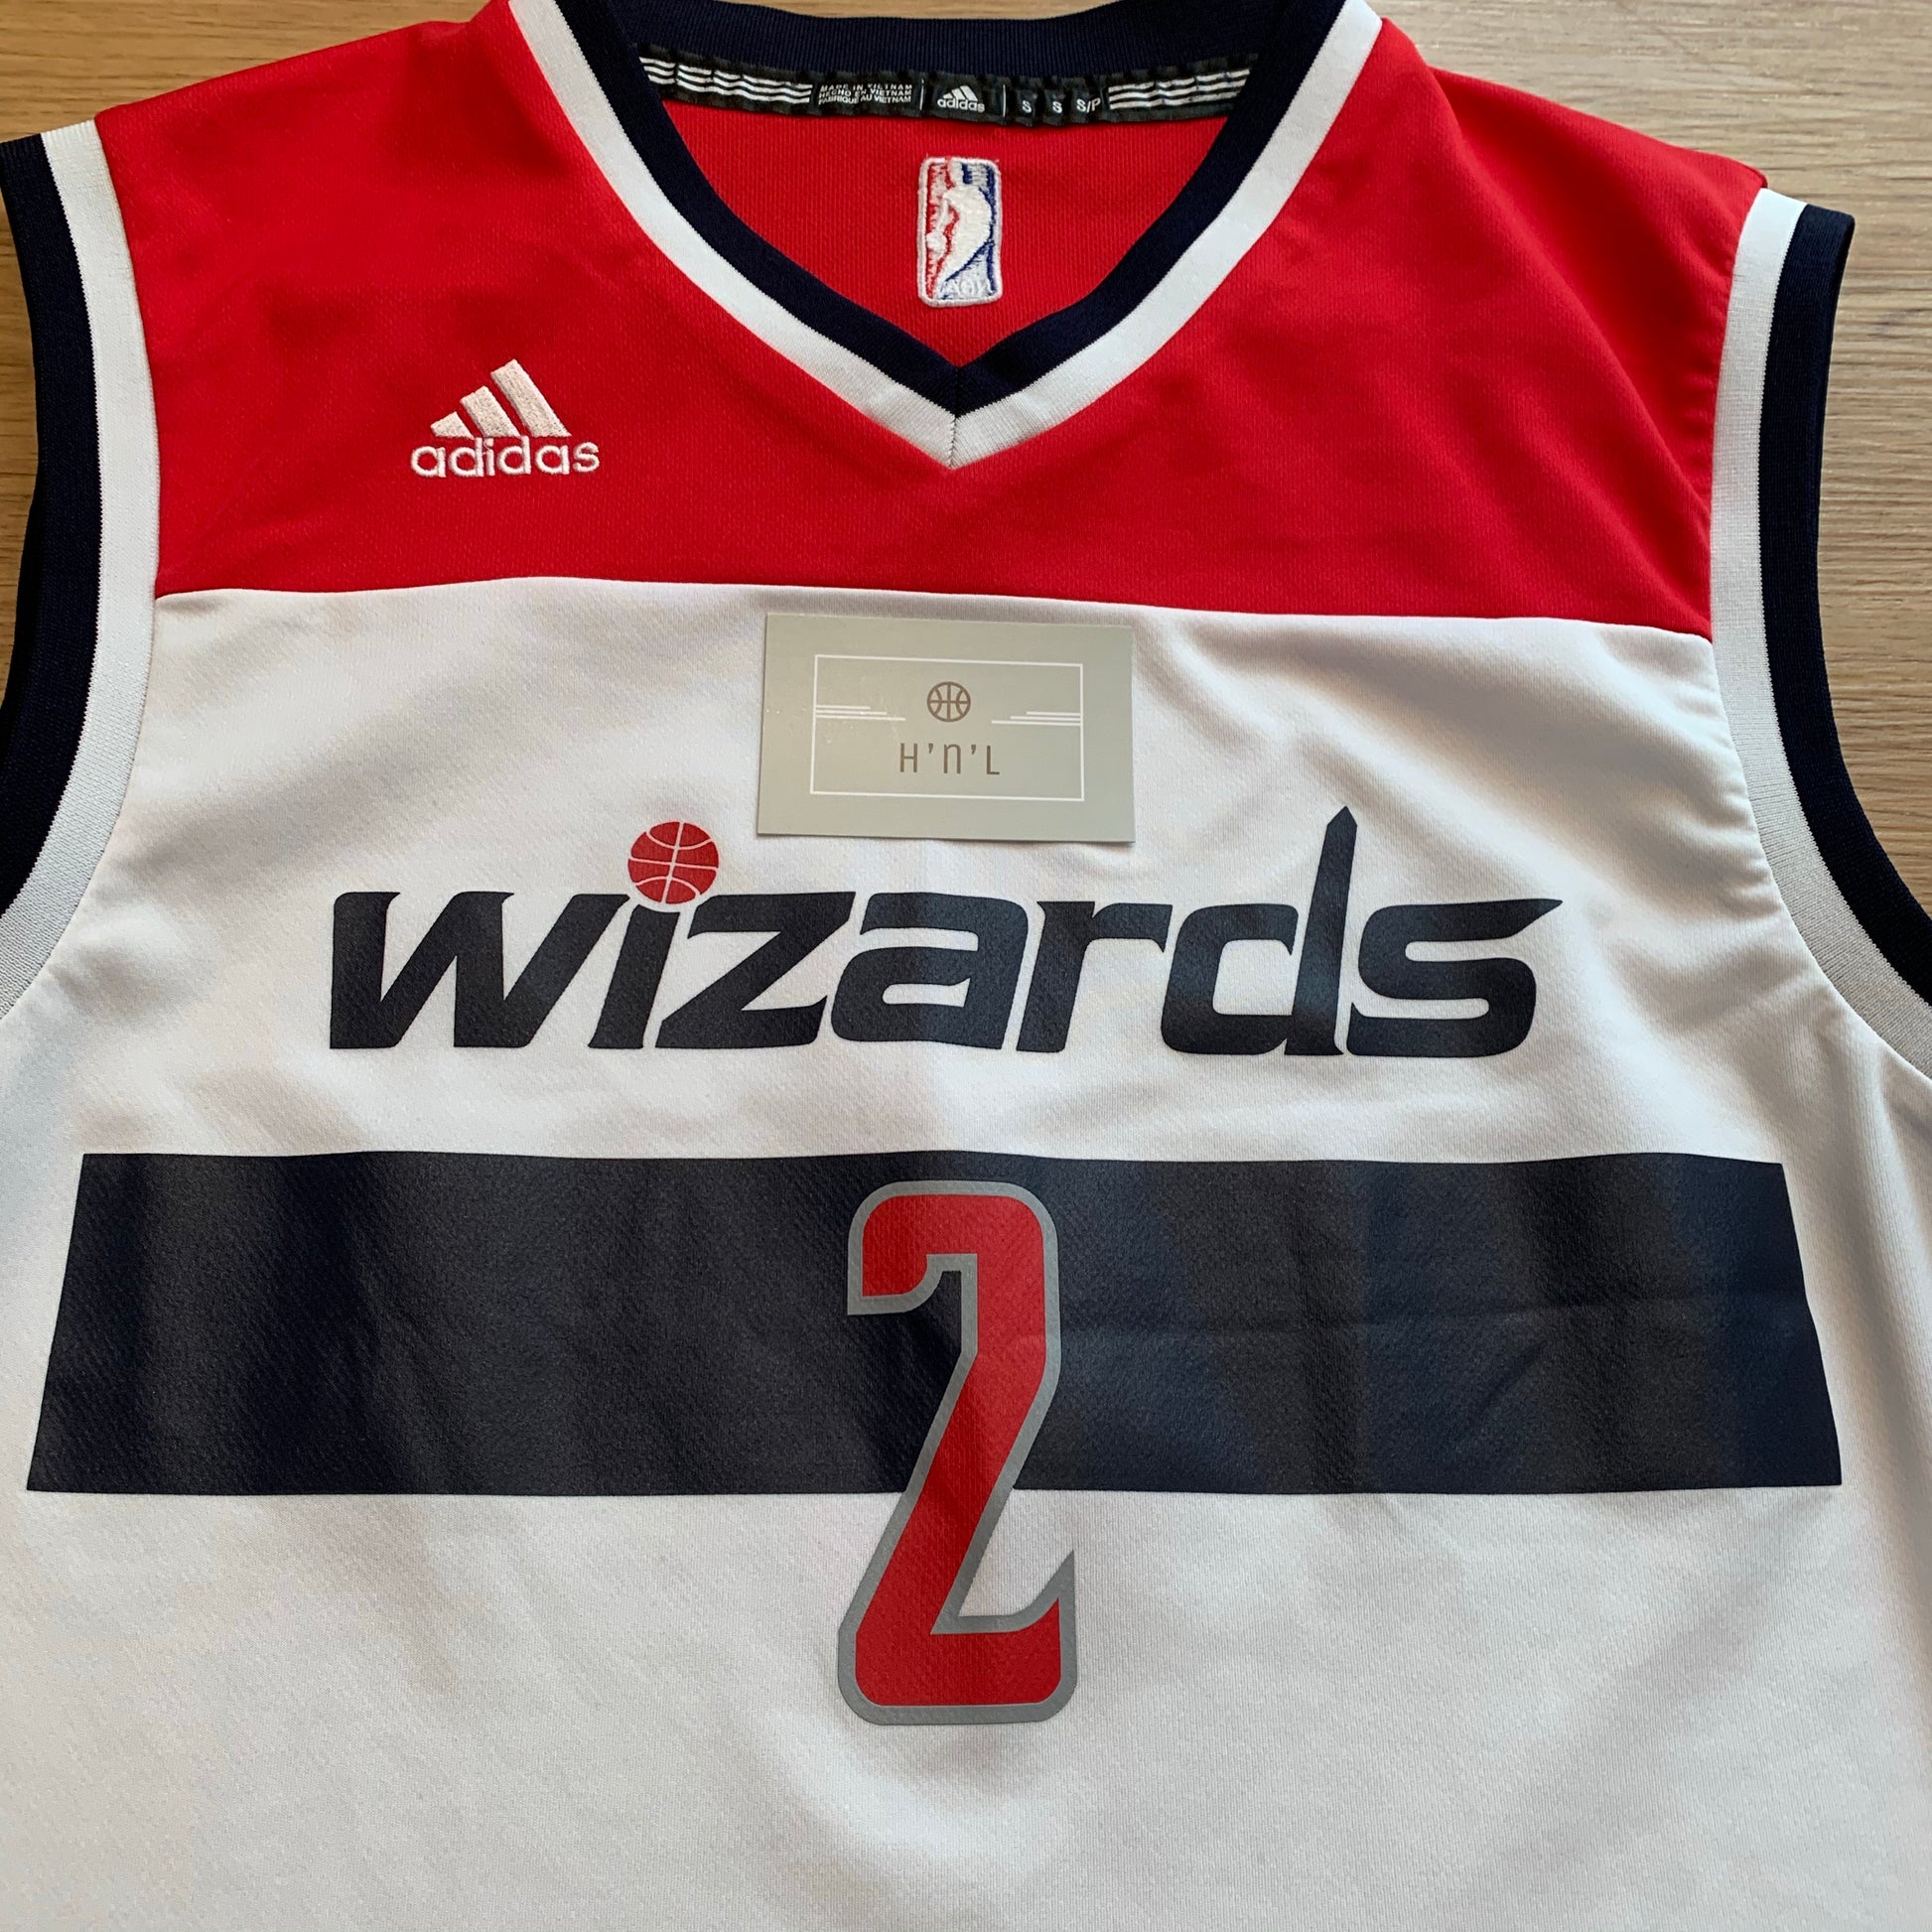 Adidas NBA Jersey Washington Wizards John Wall White sz 2X